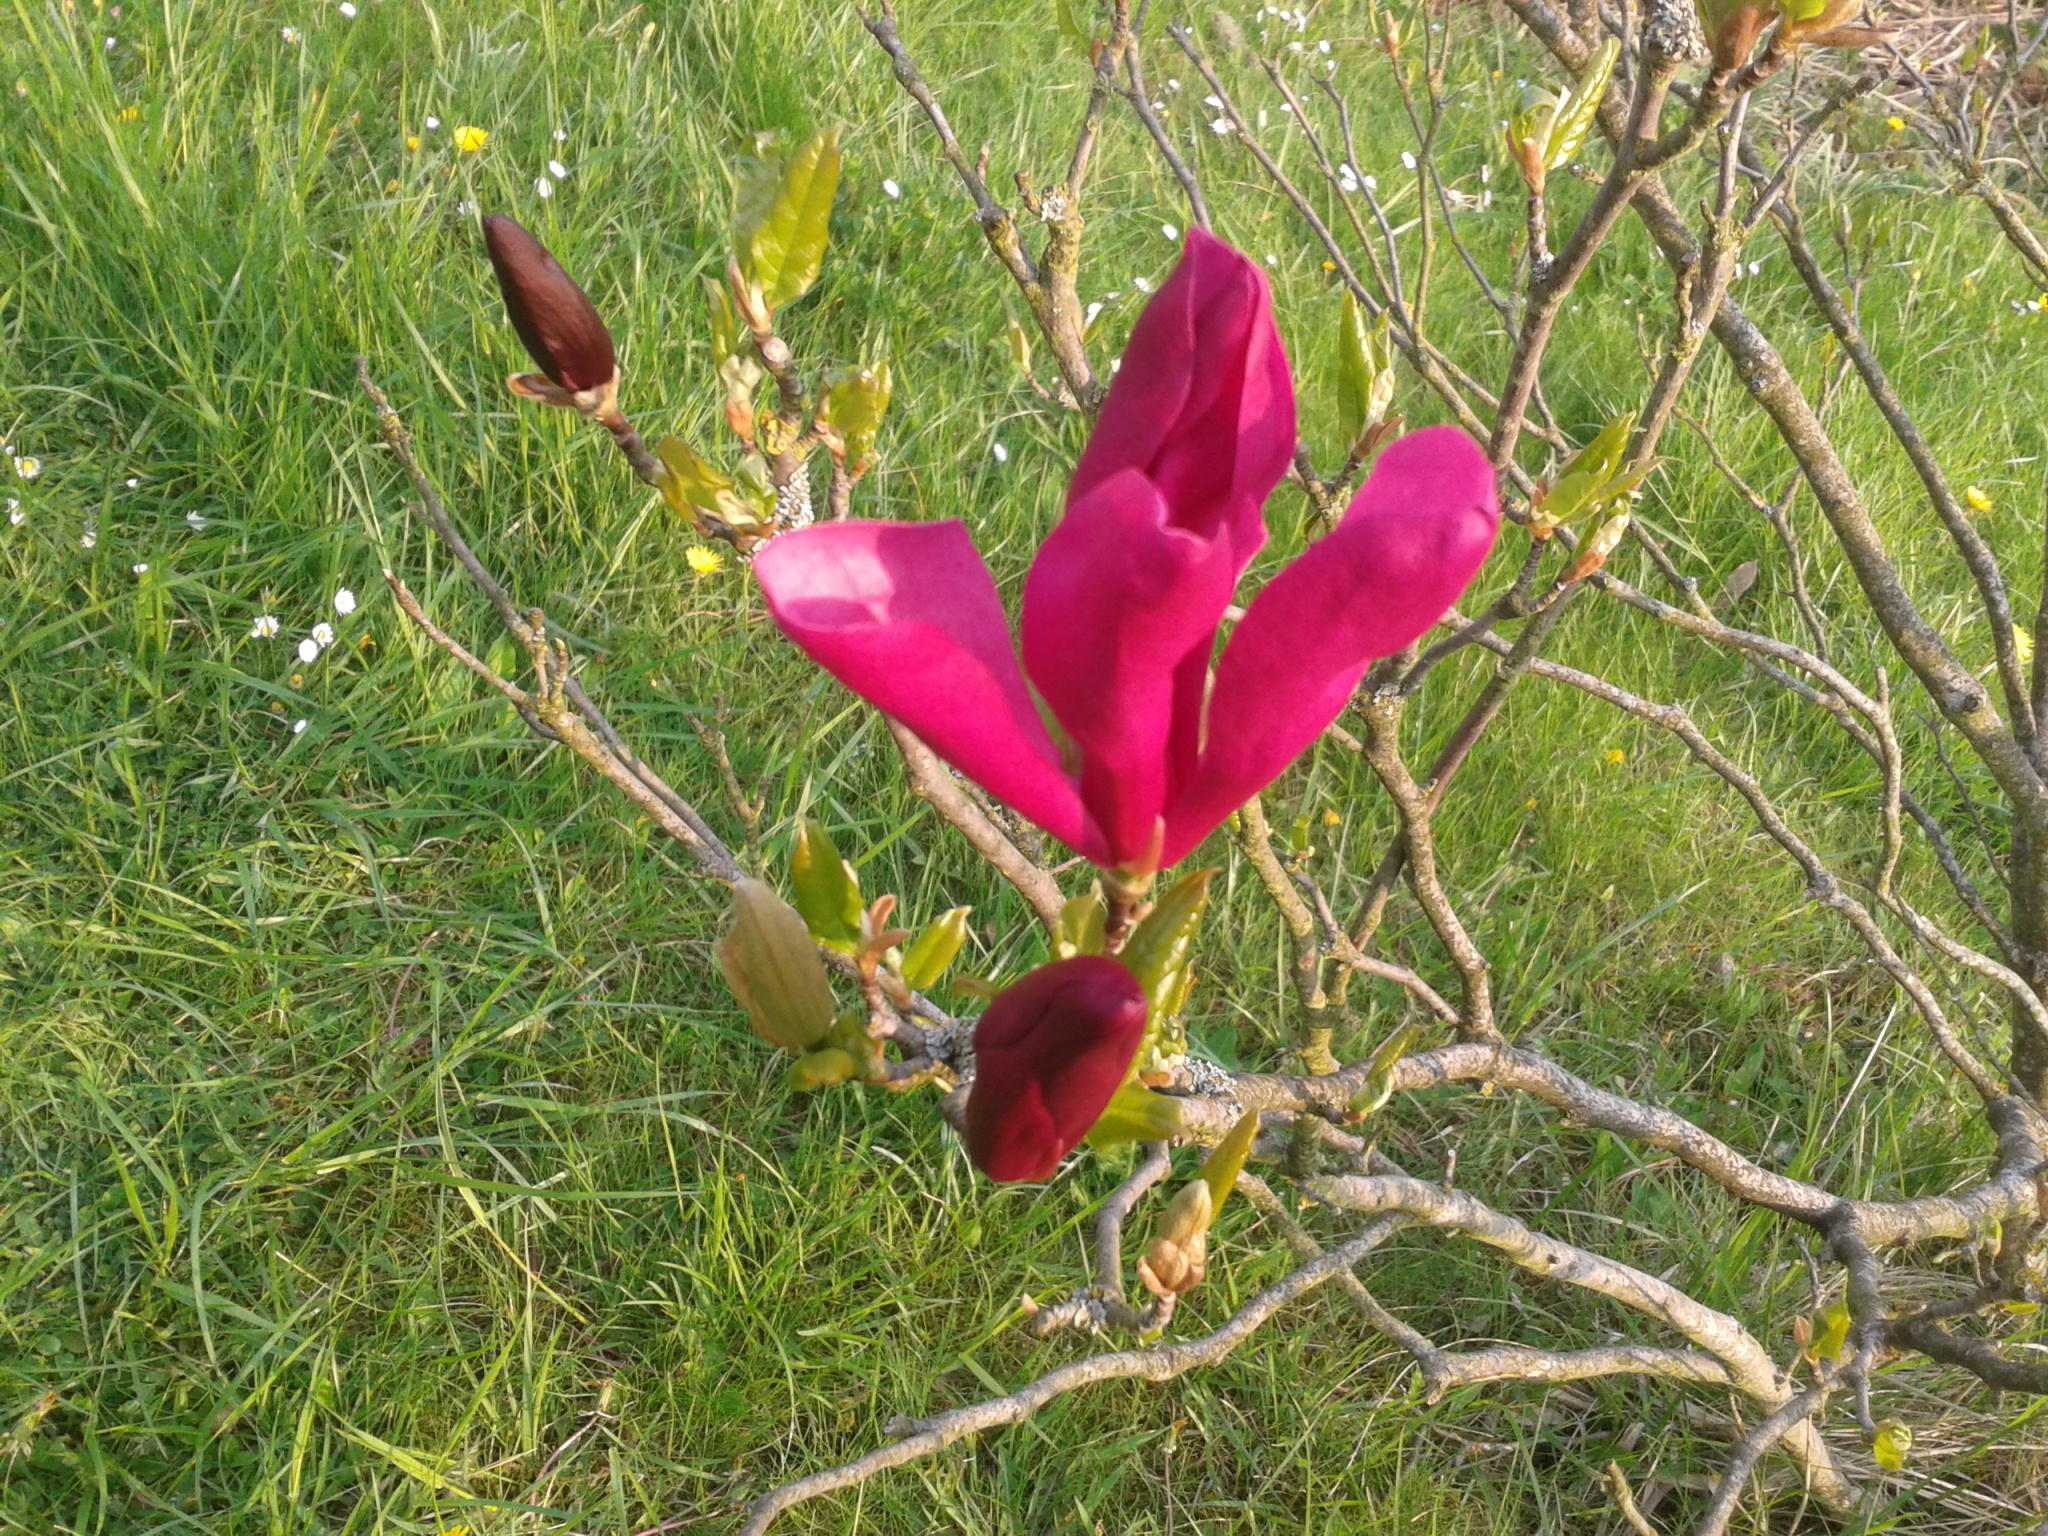 magnolie7xiht.jpg